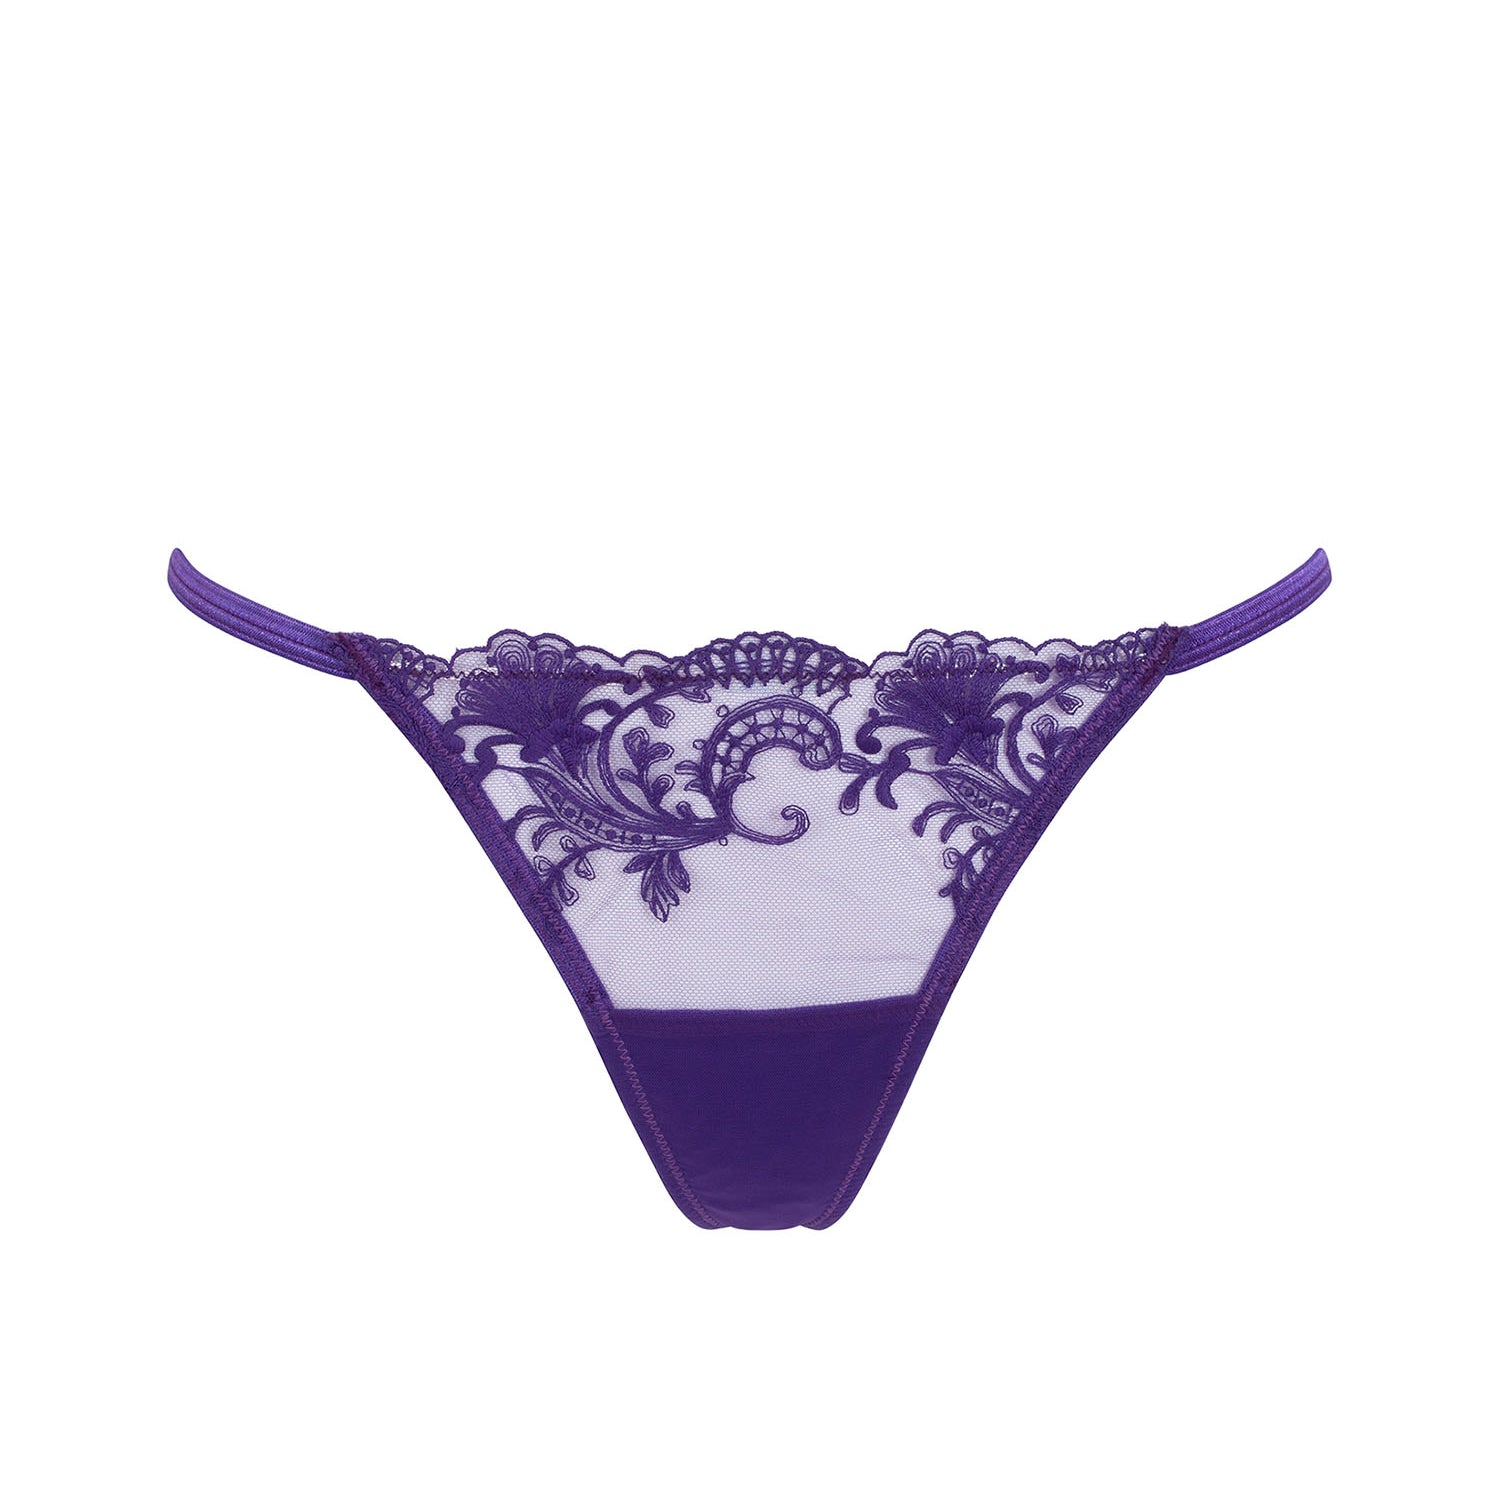 Bluebella Marseille Brief (Heliotrope Purple) - Embroidery Lace Underwear | Avec Amour Luxury Lingerie